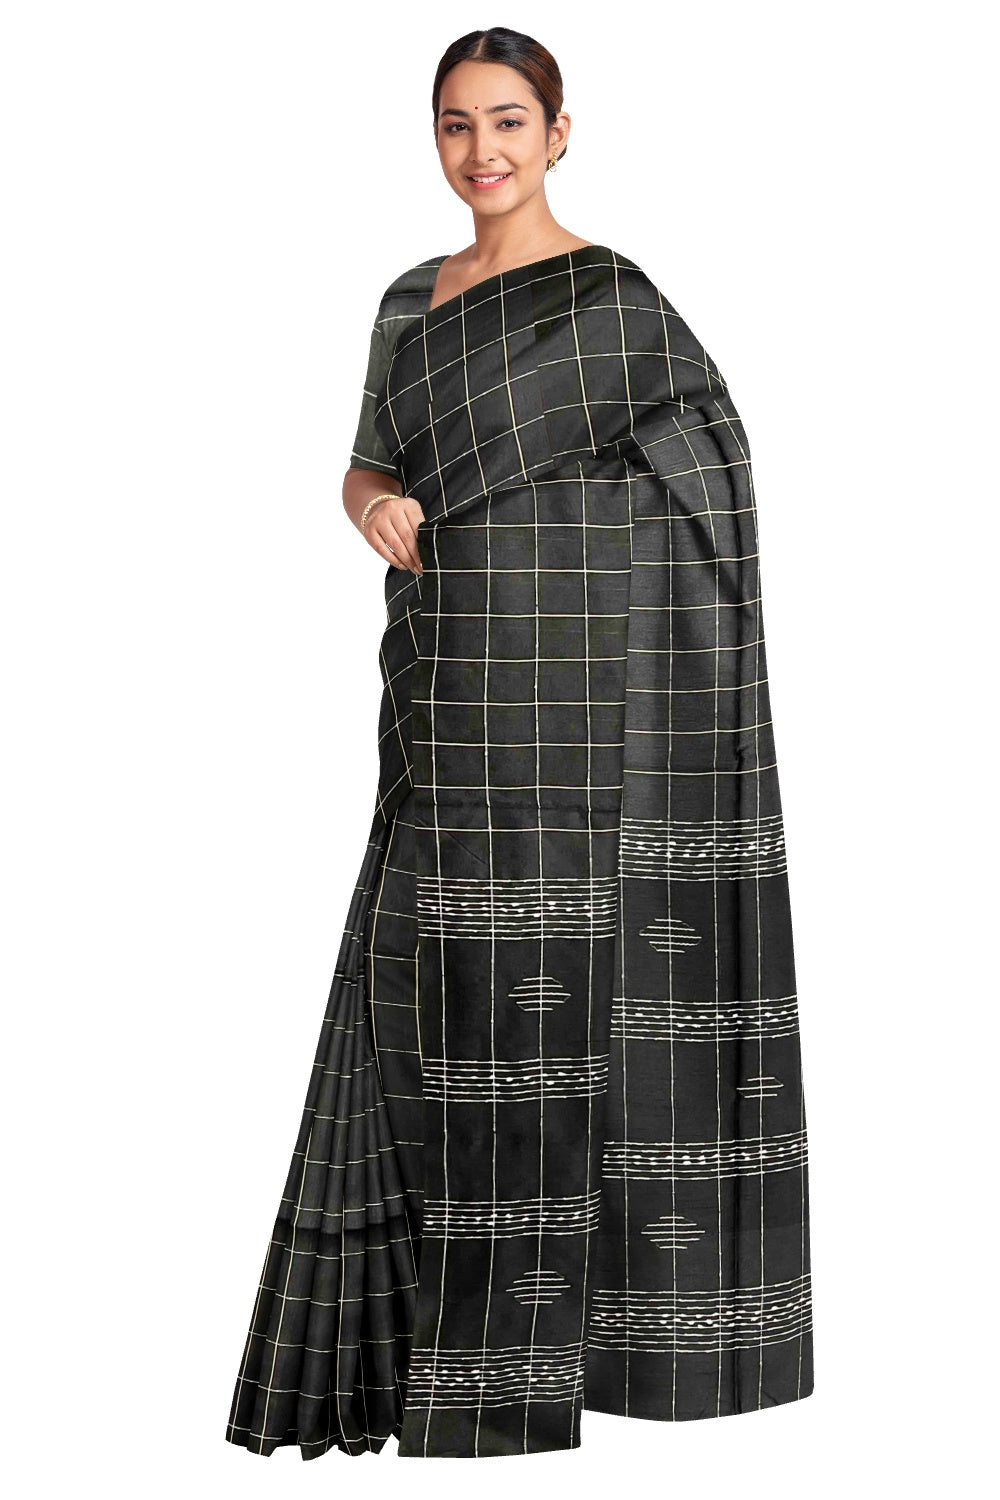 Southloom Black Semi Tussar Checkered Designer Saree with Tassels on Pallu